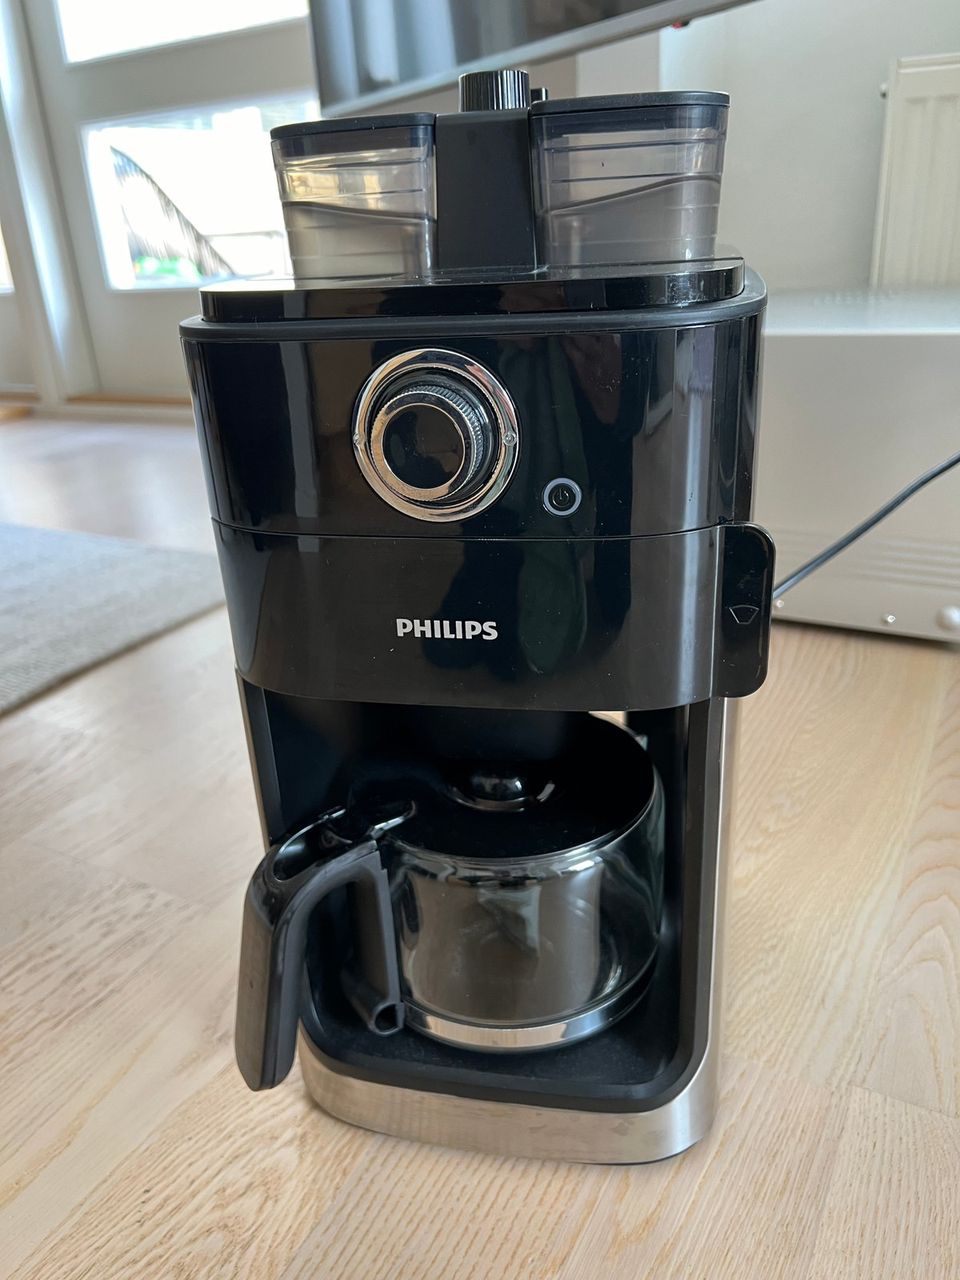 Philips kahvinkeitin kahvipapujen jauhamisominaisuudella